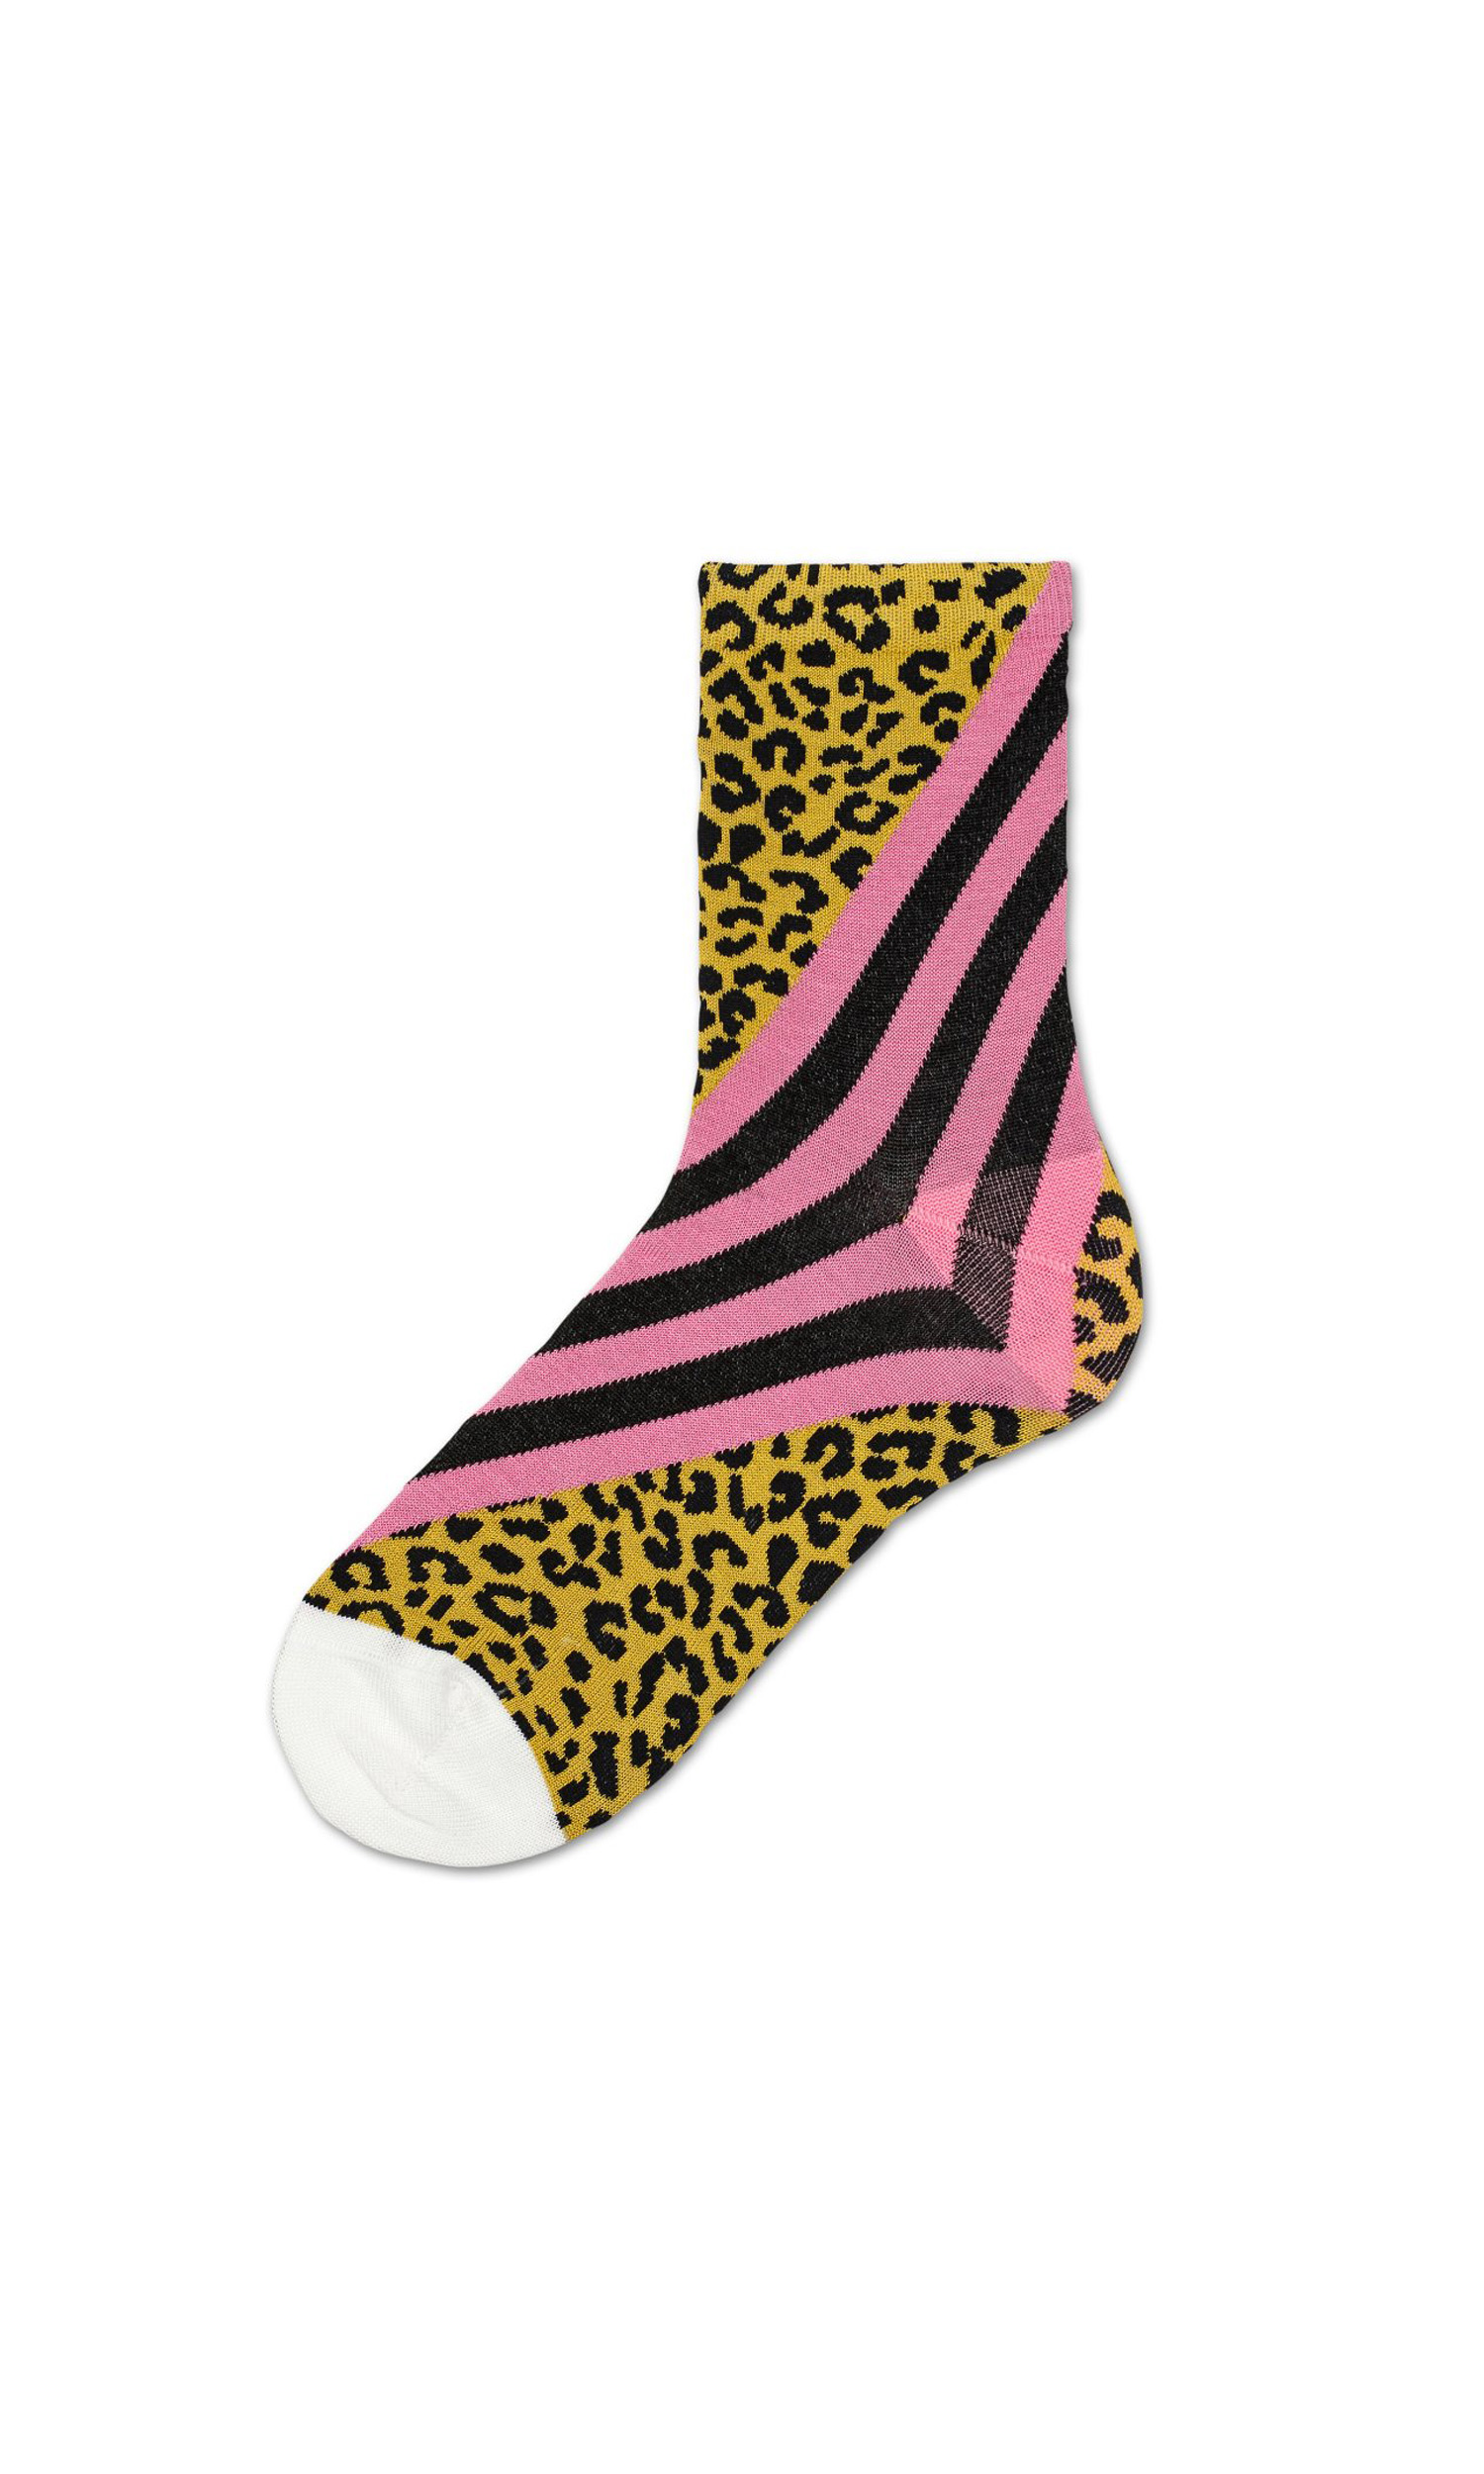 Hysteria socks, $39, from Ruby